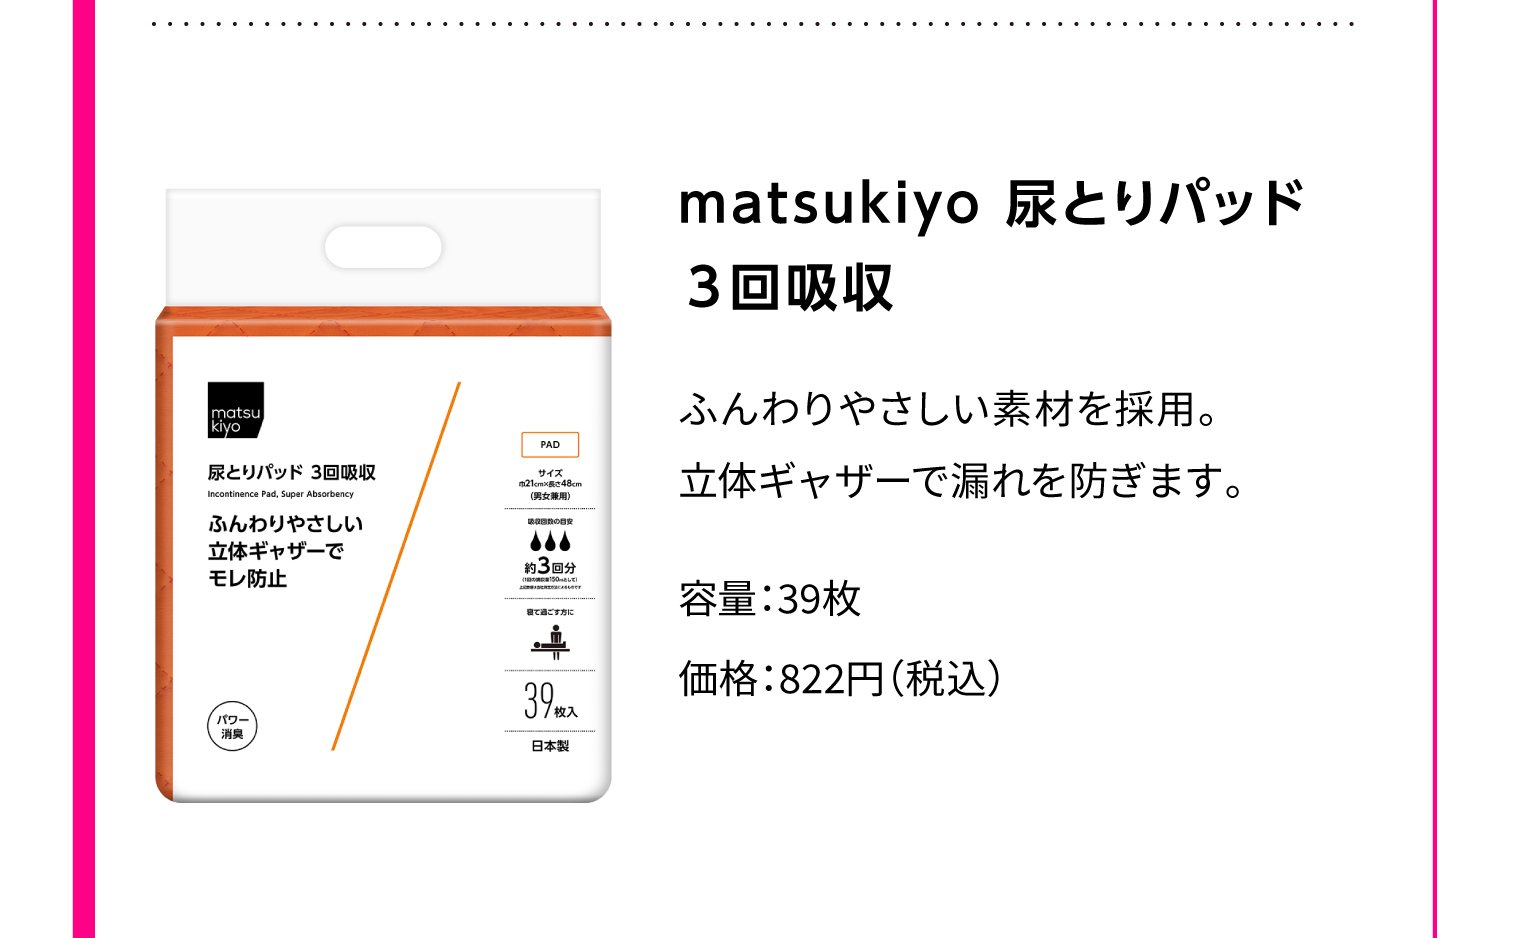 matsukiyo 尿とりパッド 3回吸収 ふんわりやさしい素材を採用。立体ギャザーで漏れを防ぎます。 容量：39枚 価格：822円（税込）